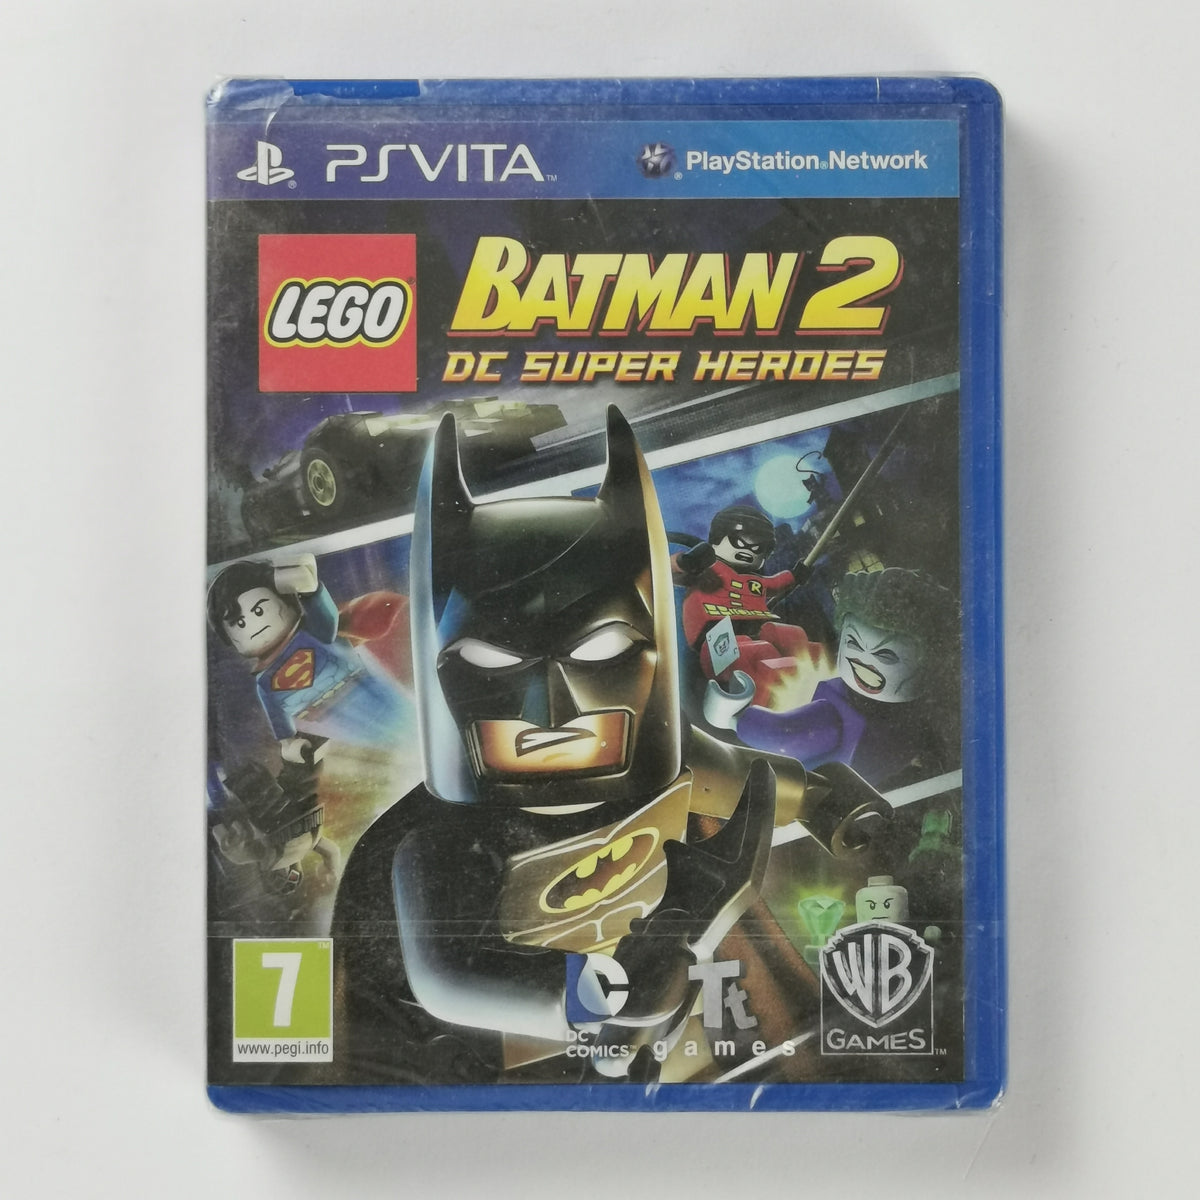 Batman 2 Dc Superheroes (Ps Vita) [PSV]